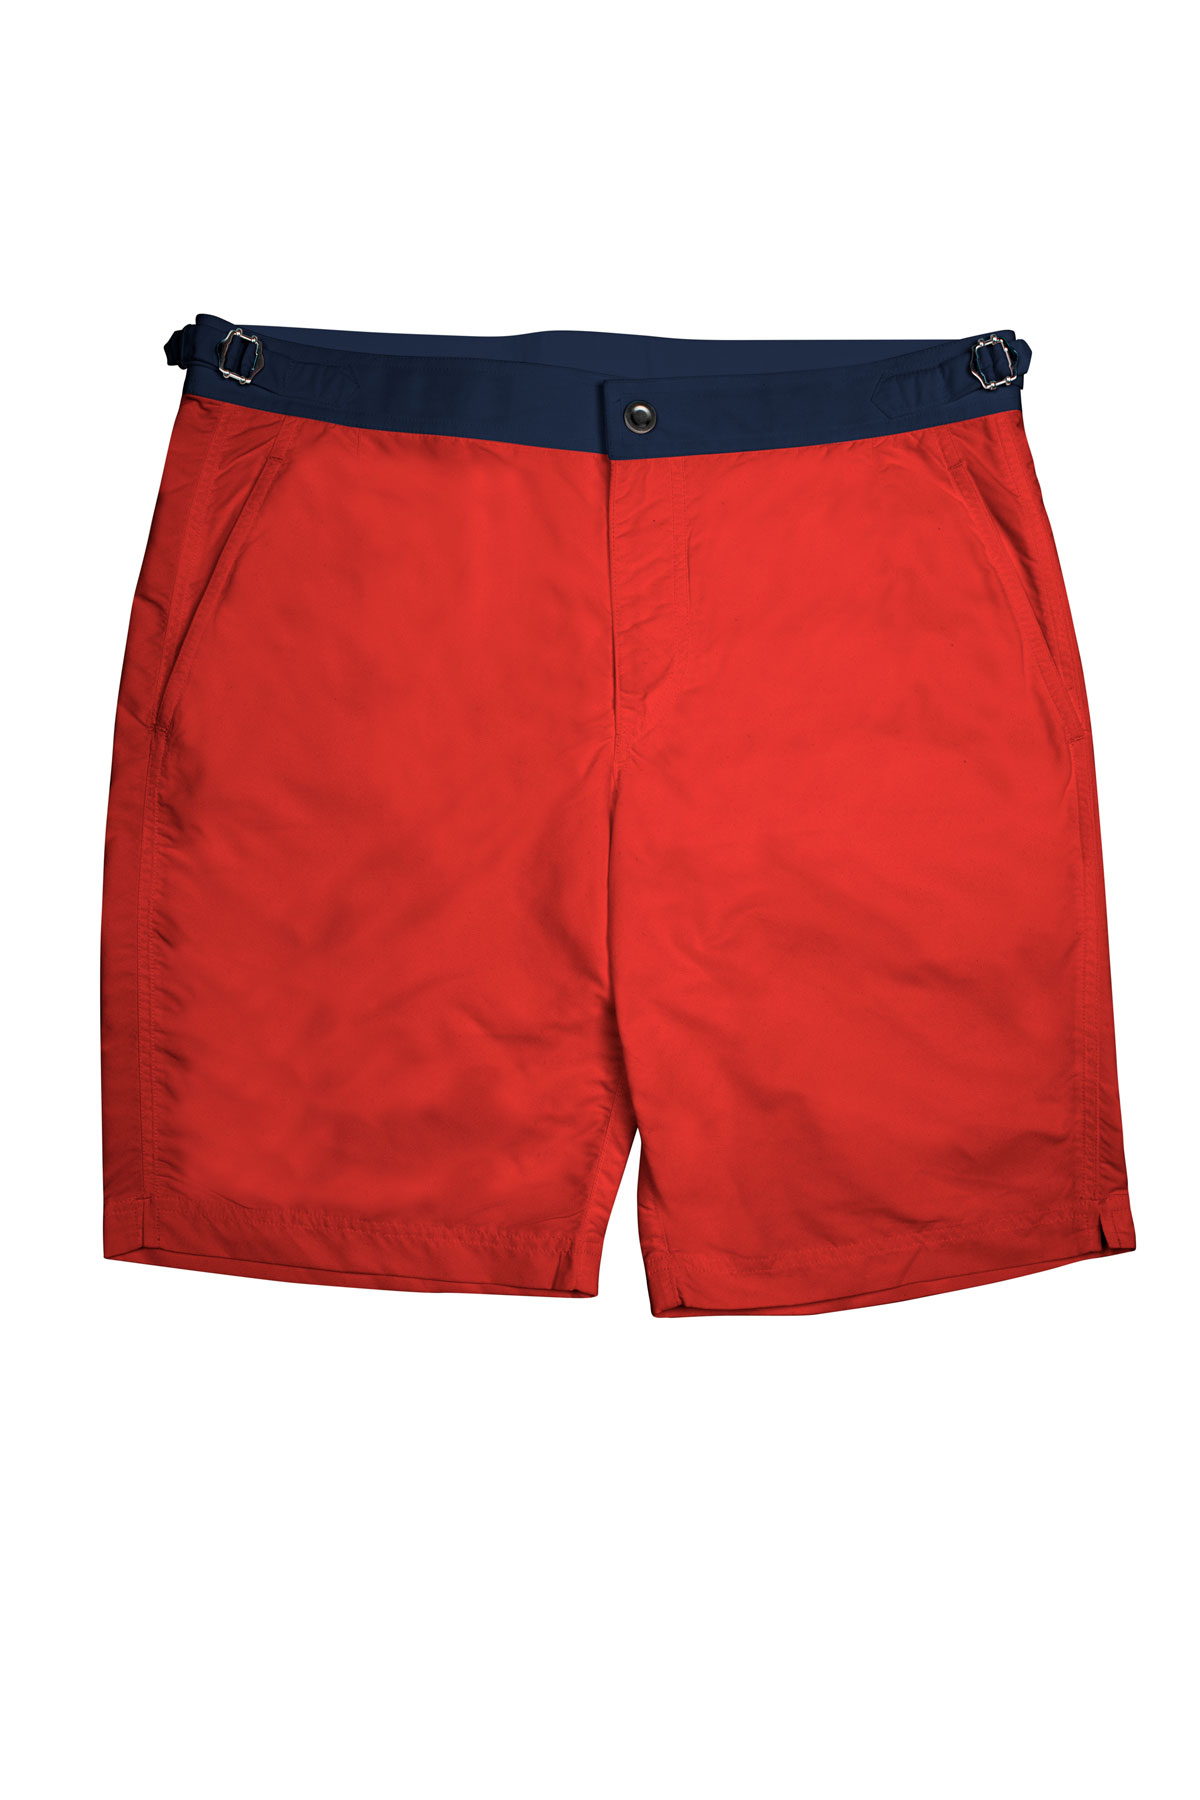 Red Swim Shorts w Navy Waistband